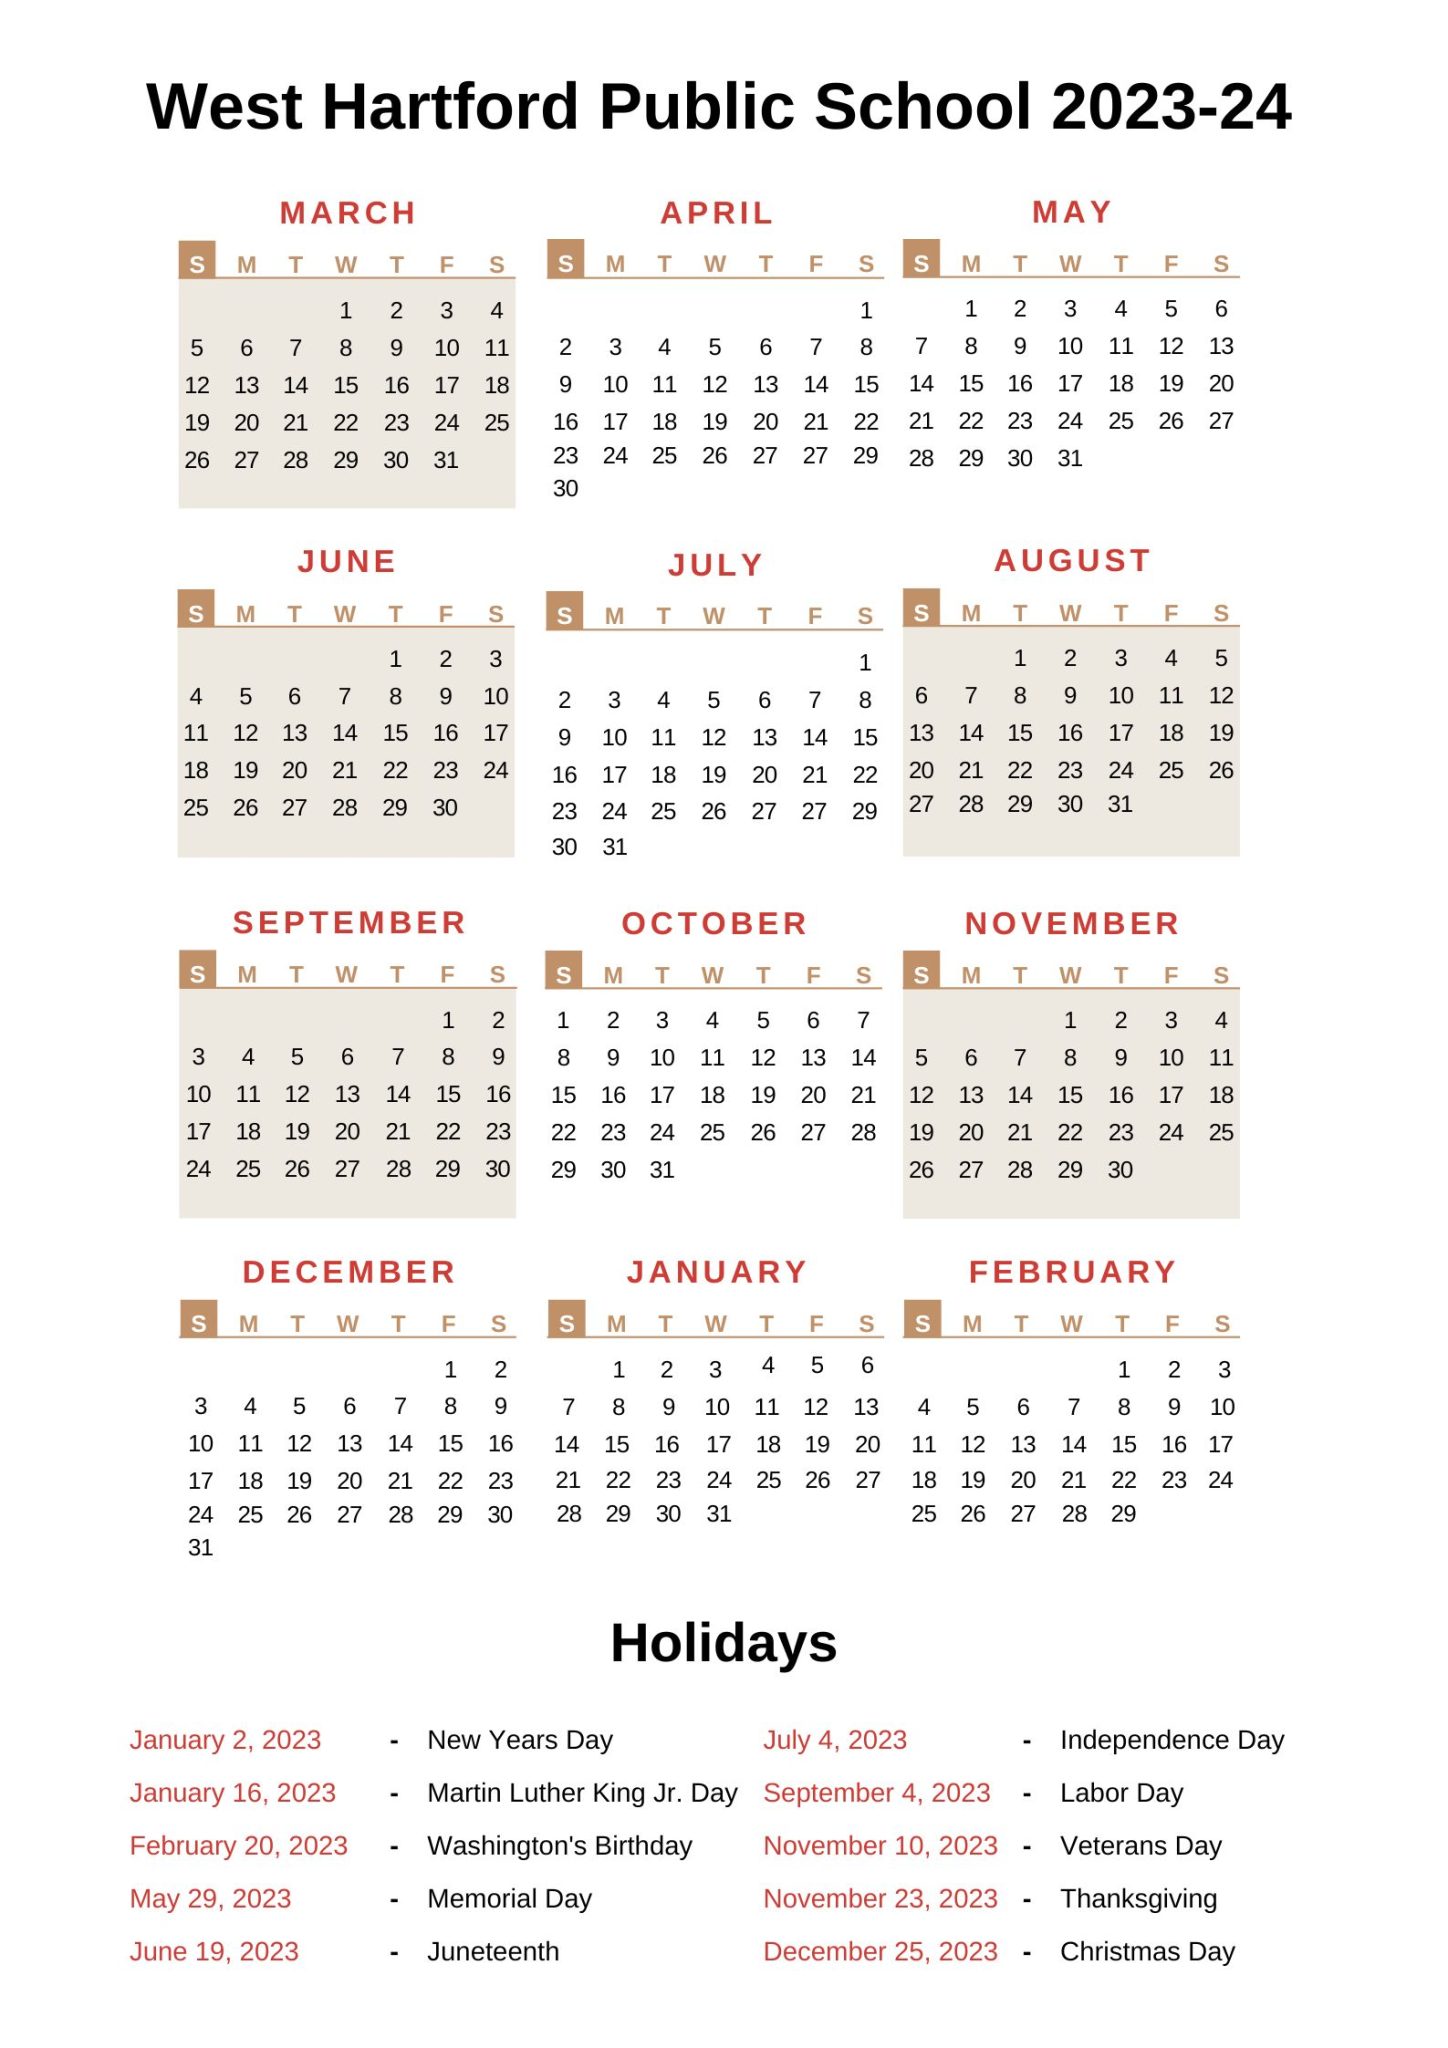 West Hartford Public Schools Calendar 2023 24 With Holidays